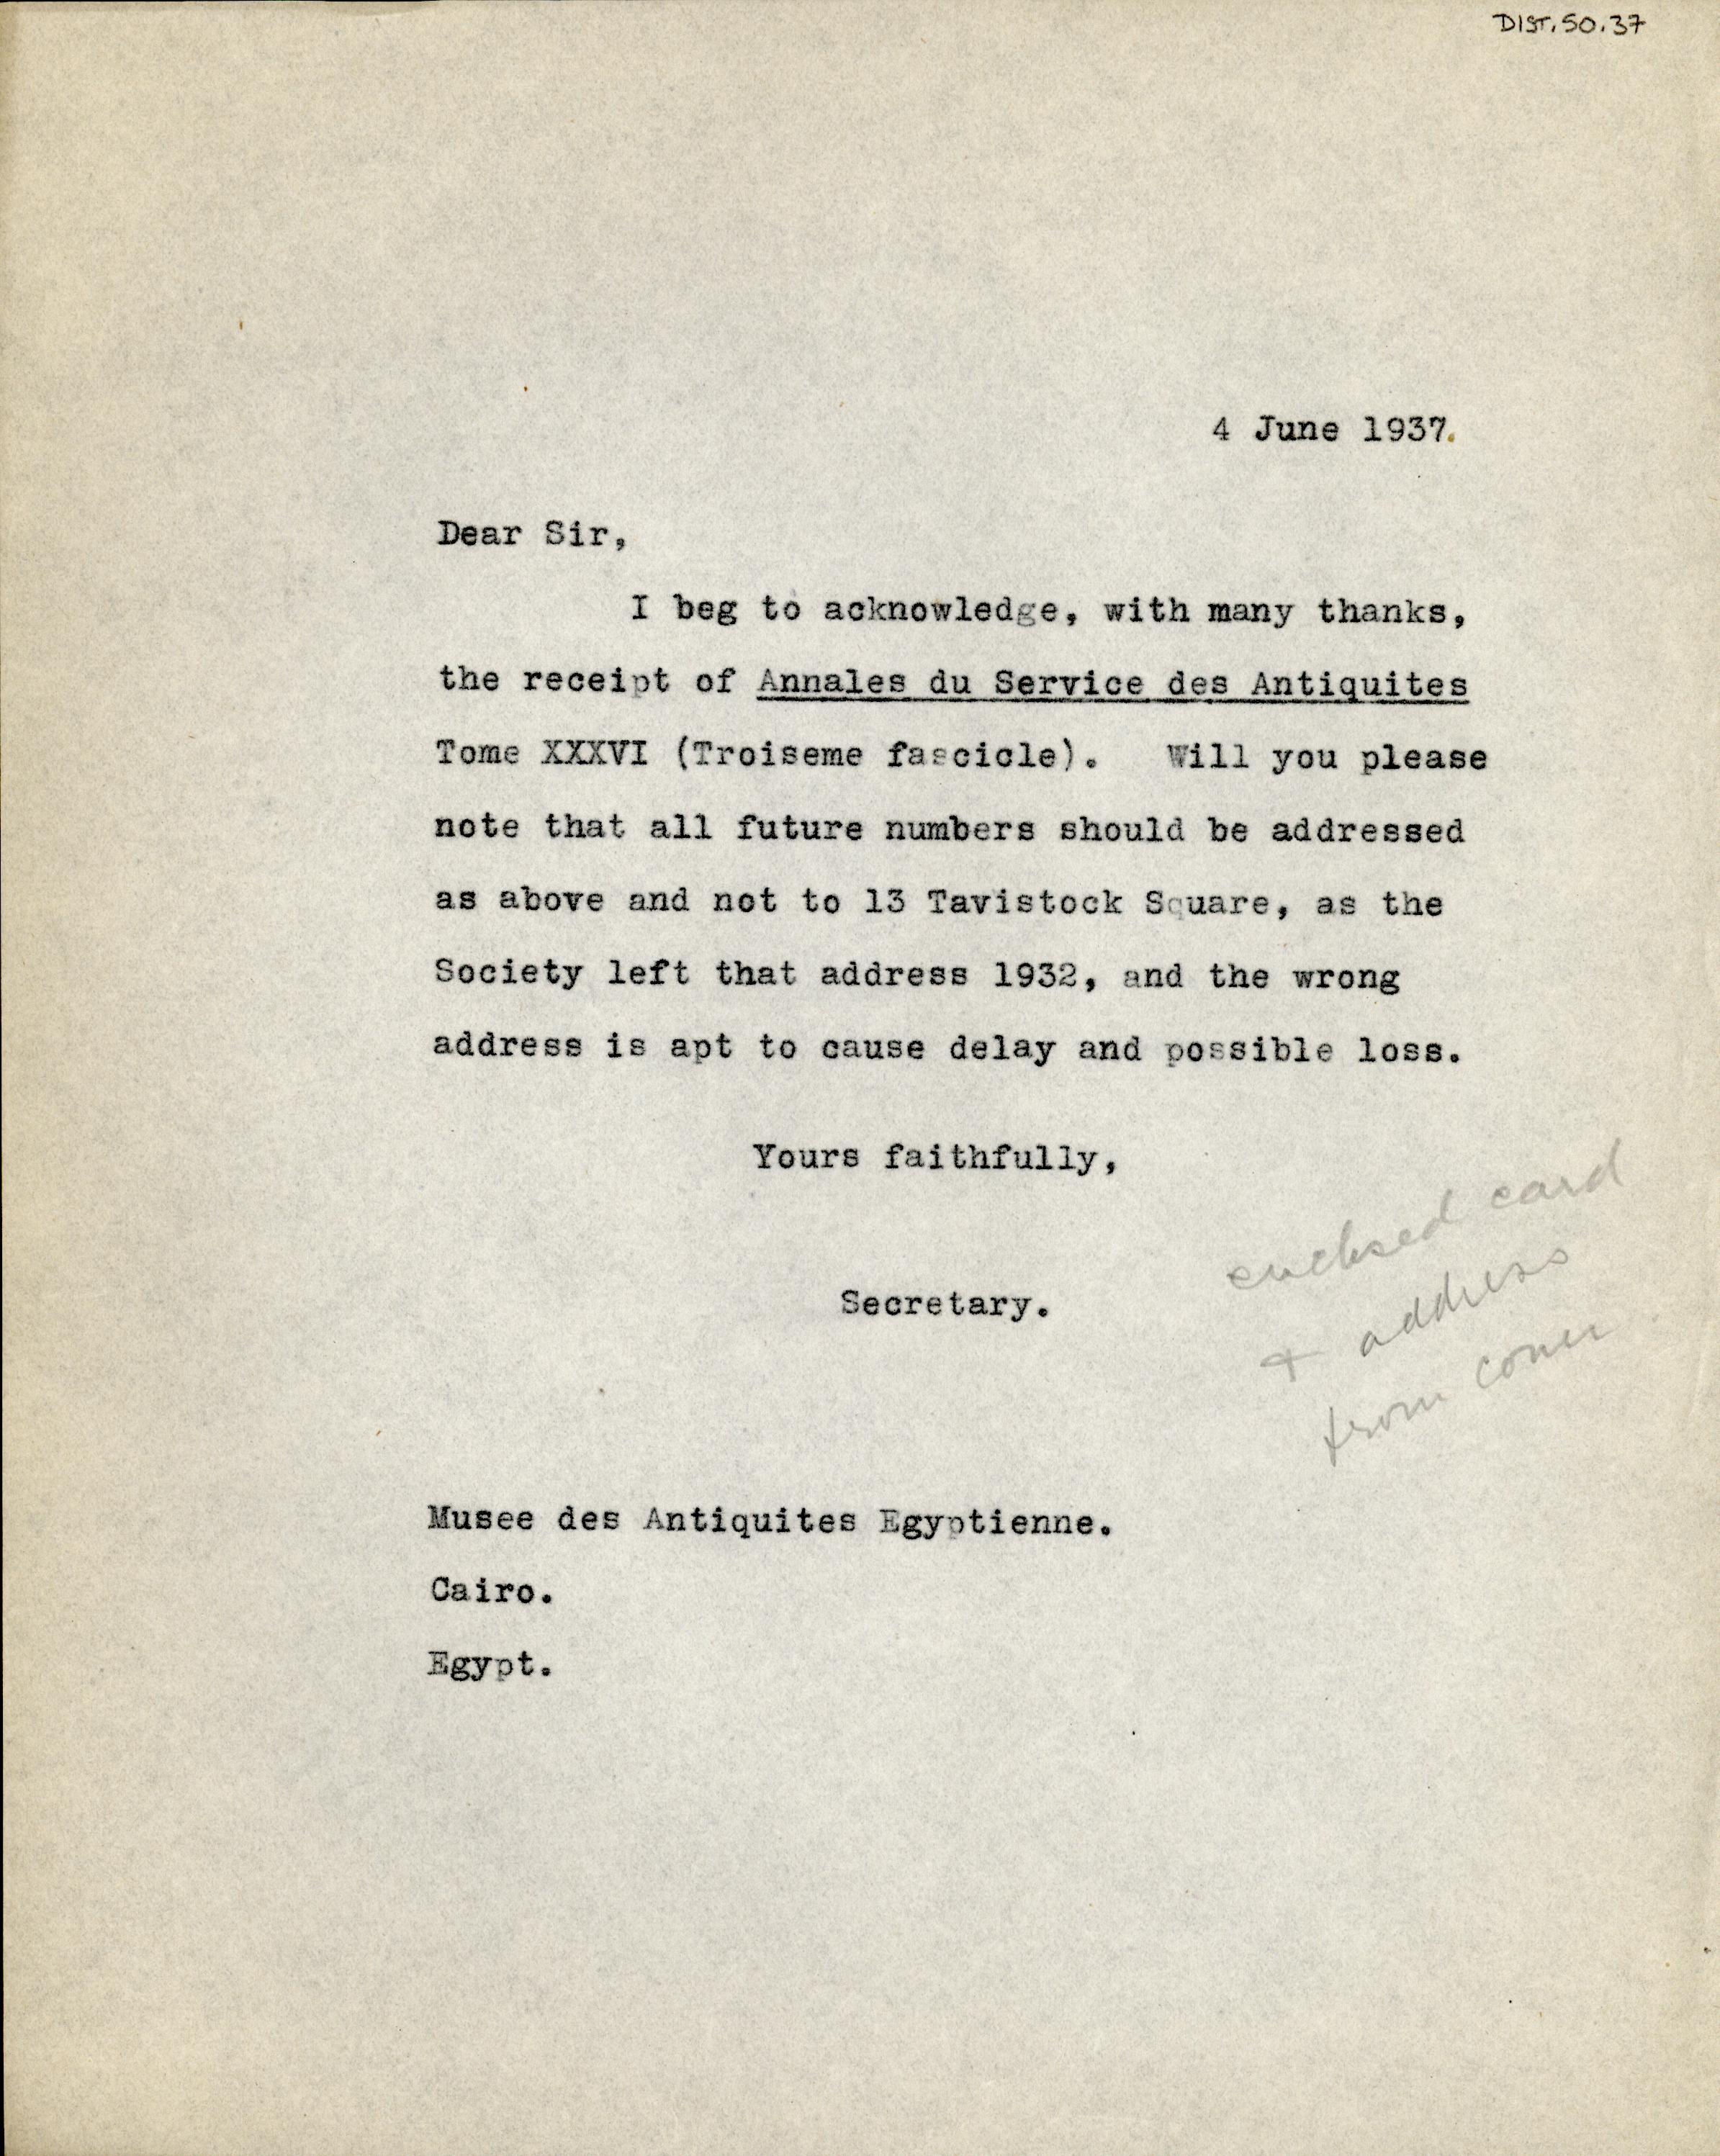 1926-39 correspondence with Antiquities Service DIST.50.37